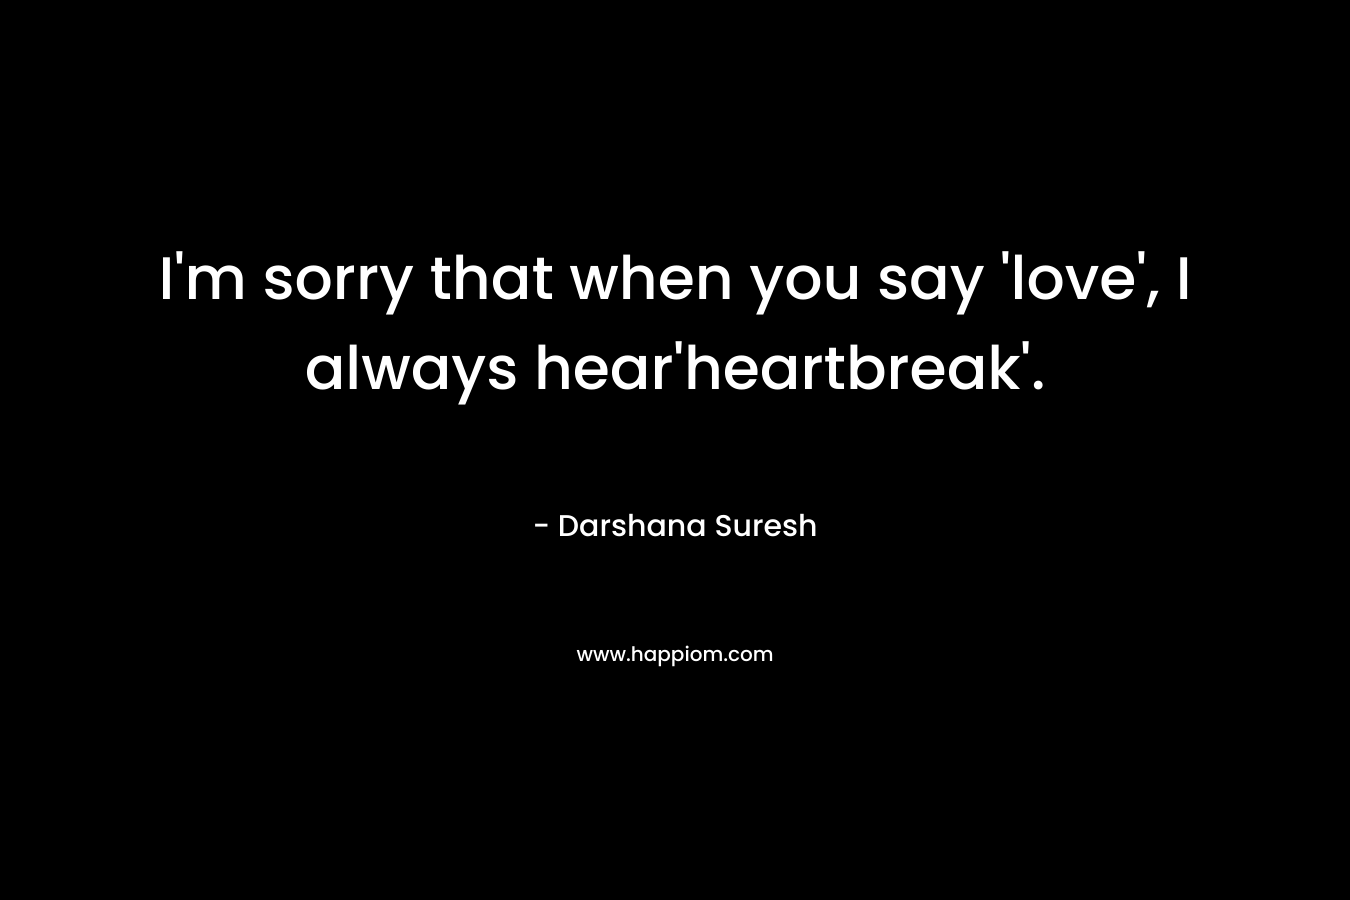 I'm sorry that when you say 'love', I always hear'heartbreak'.